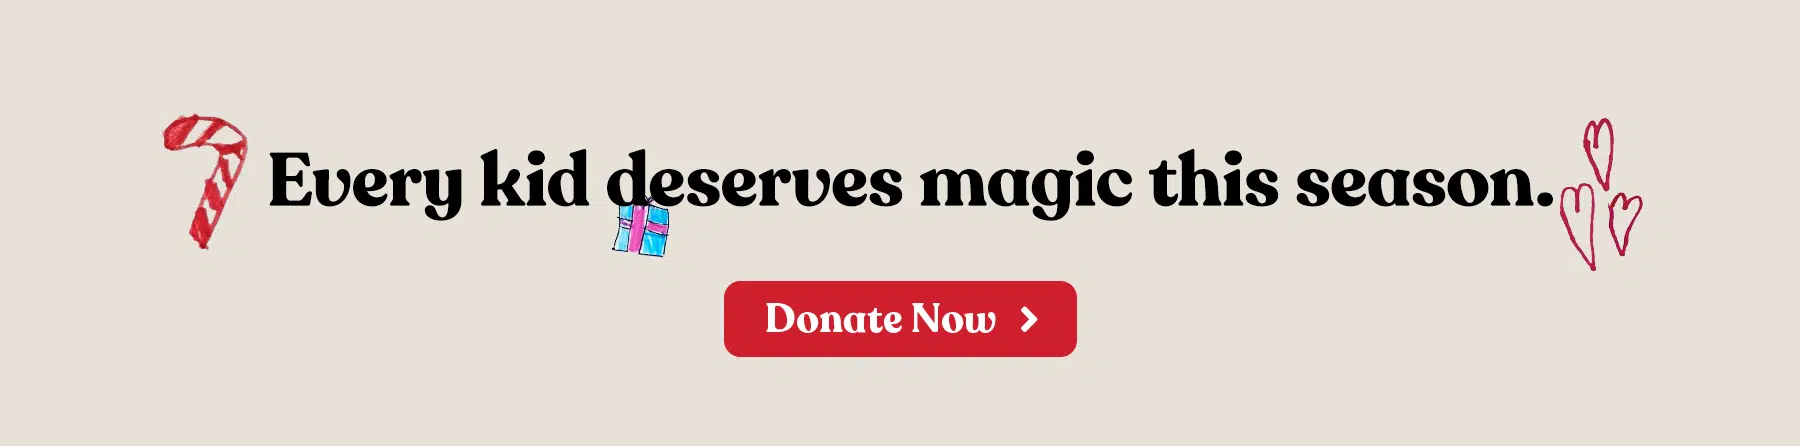 Send more magic this season. Donate now button